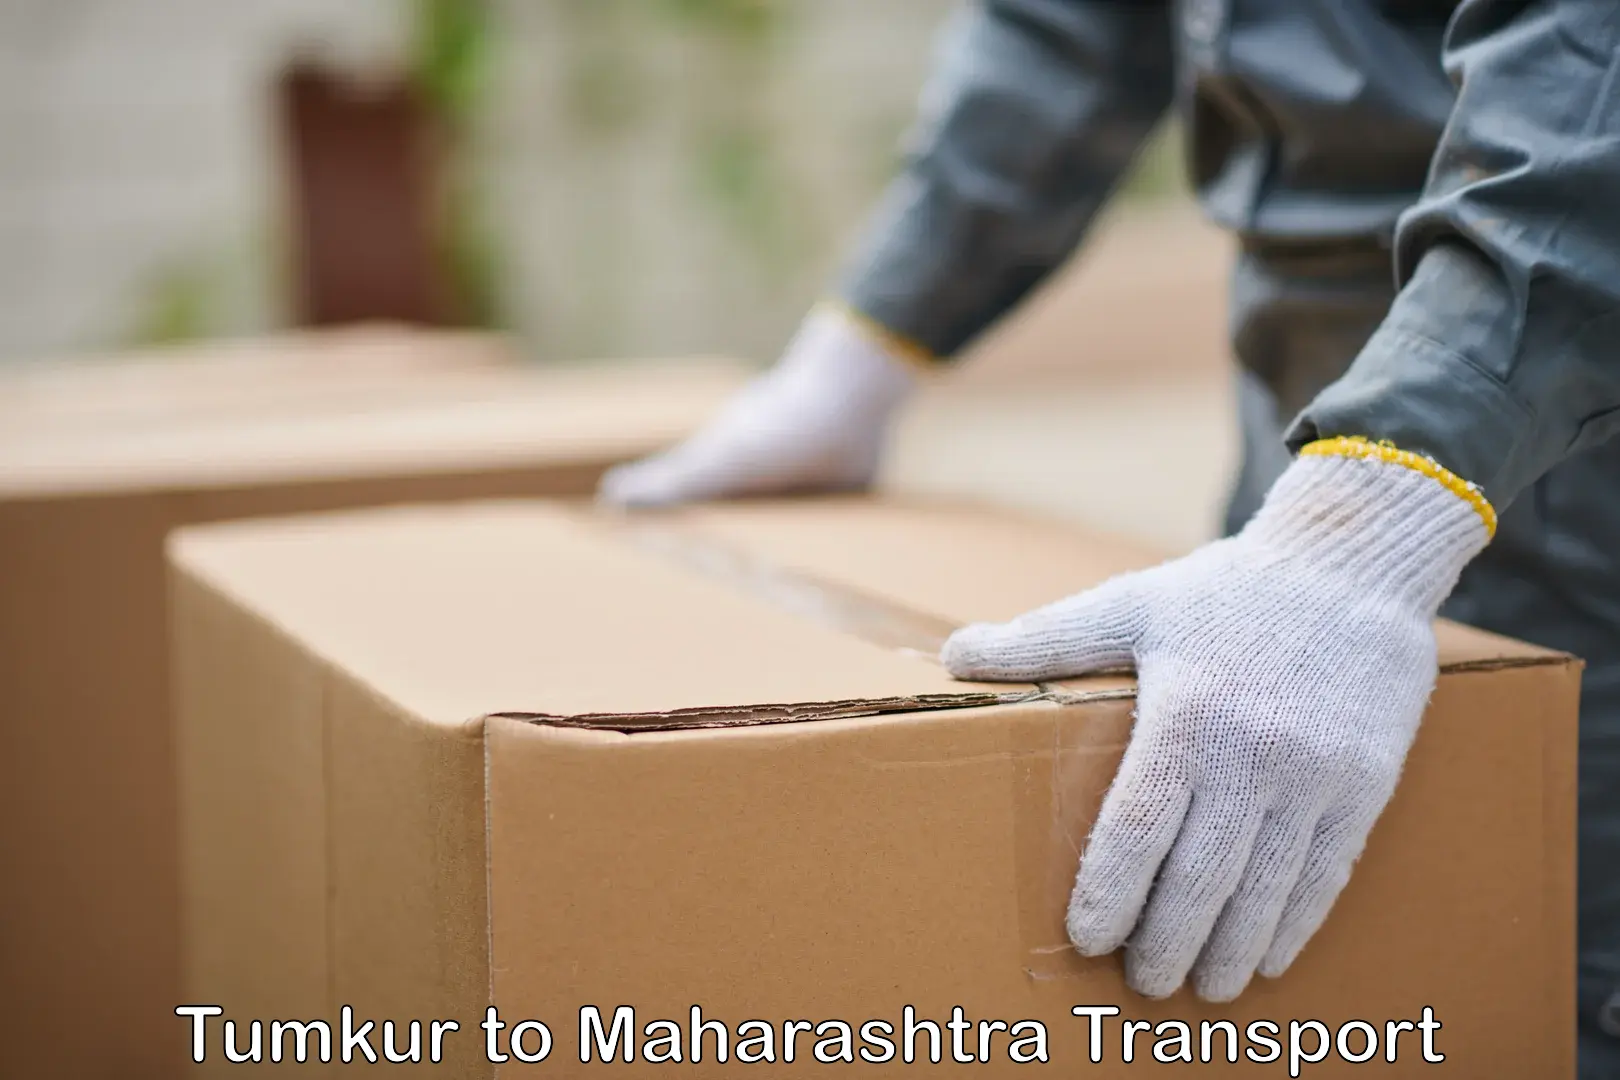 Sending bike to another city Tumkur to Maharashtra